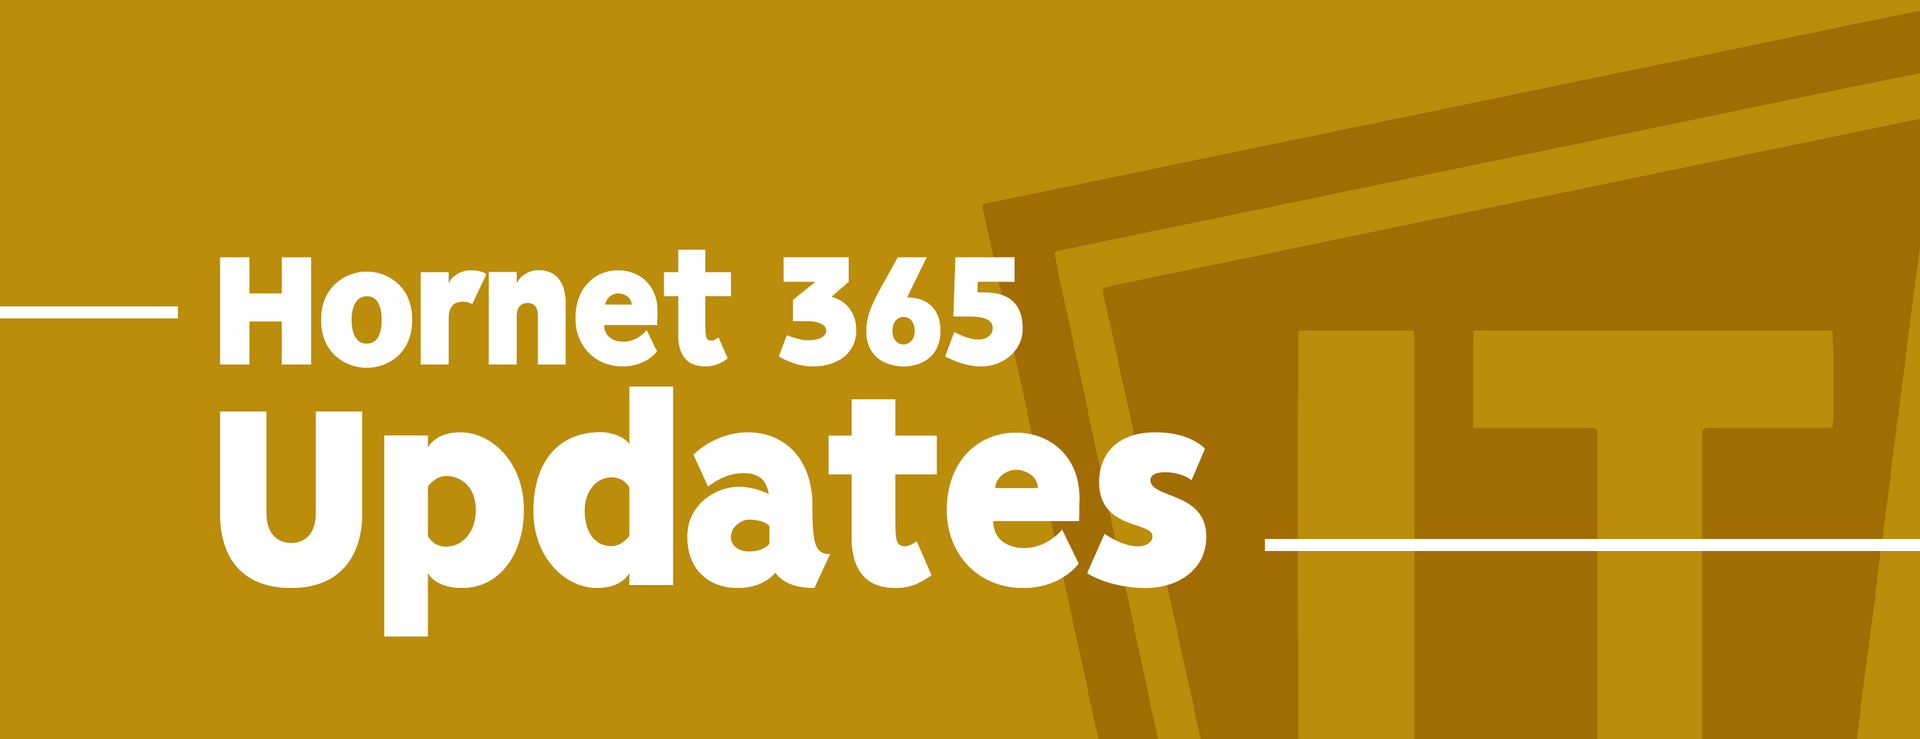 HORNET 365 Updates